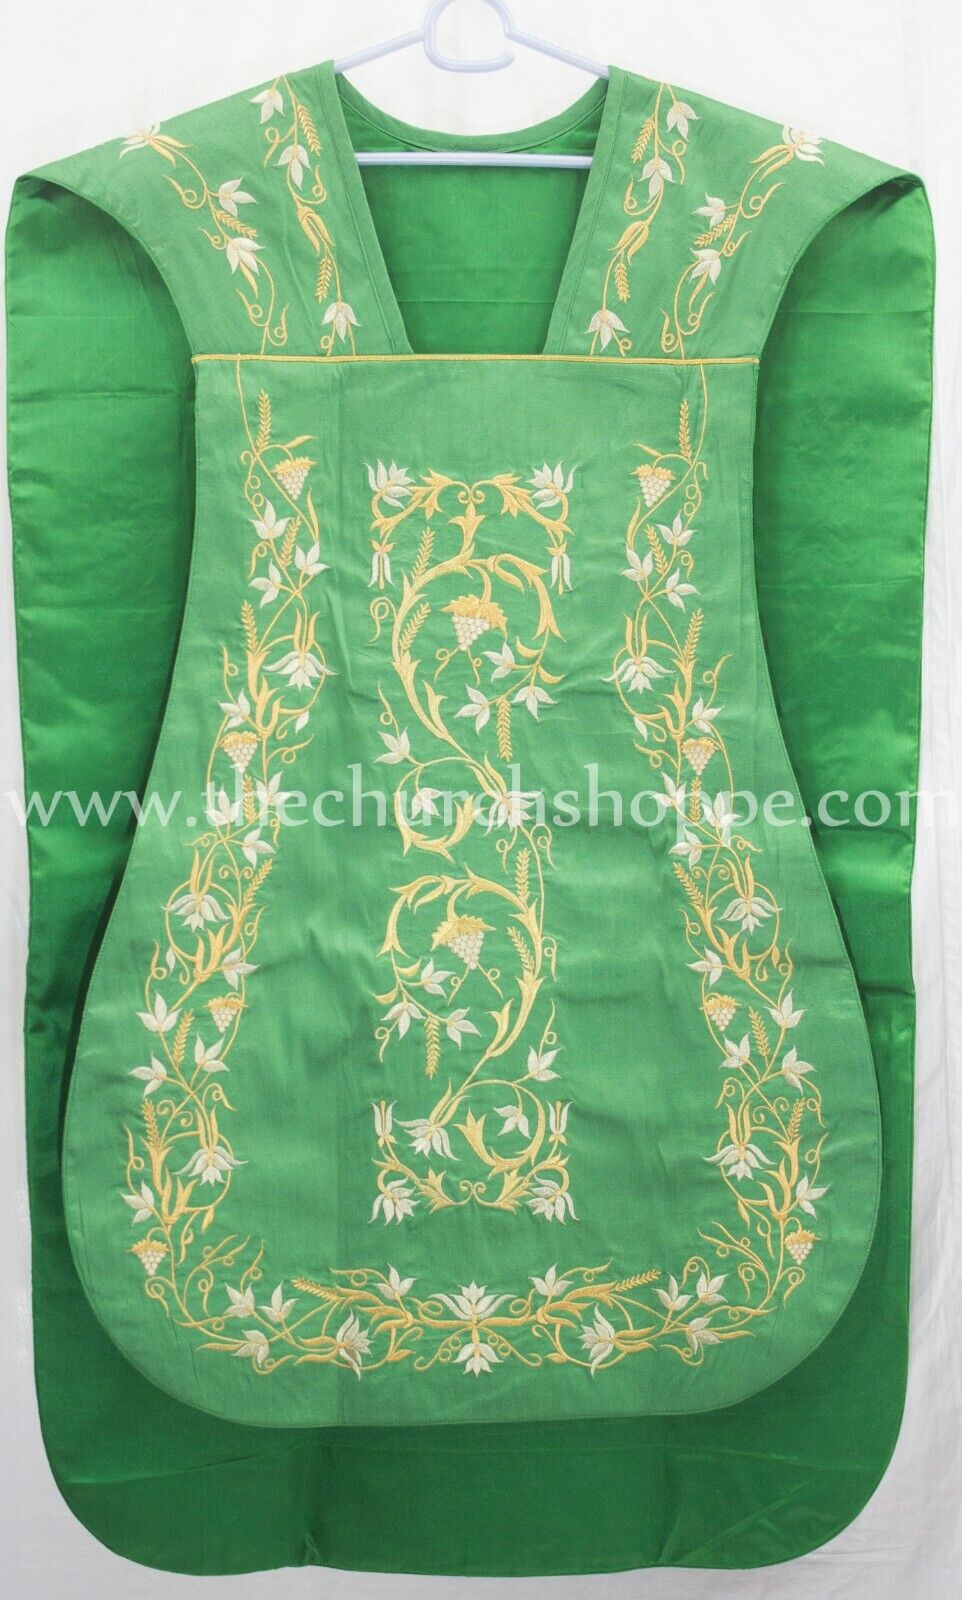 GREEN Roman Chasuble Fiddleback Vestment & 5 piece mass set IHS embroidery,FELT 